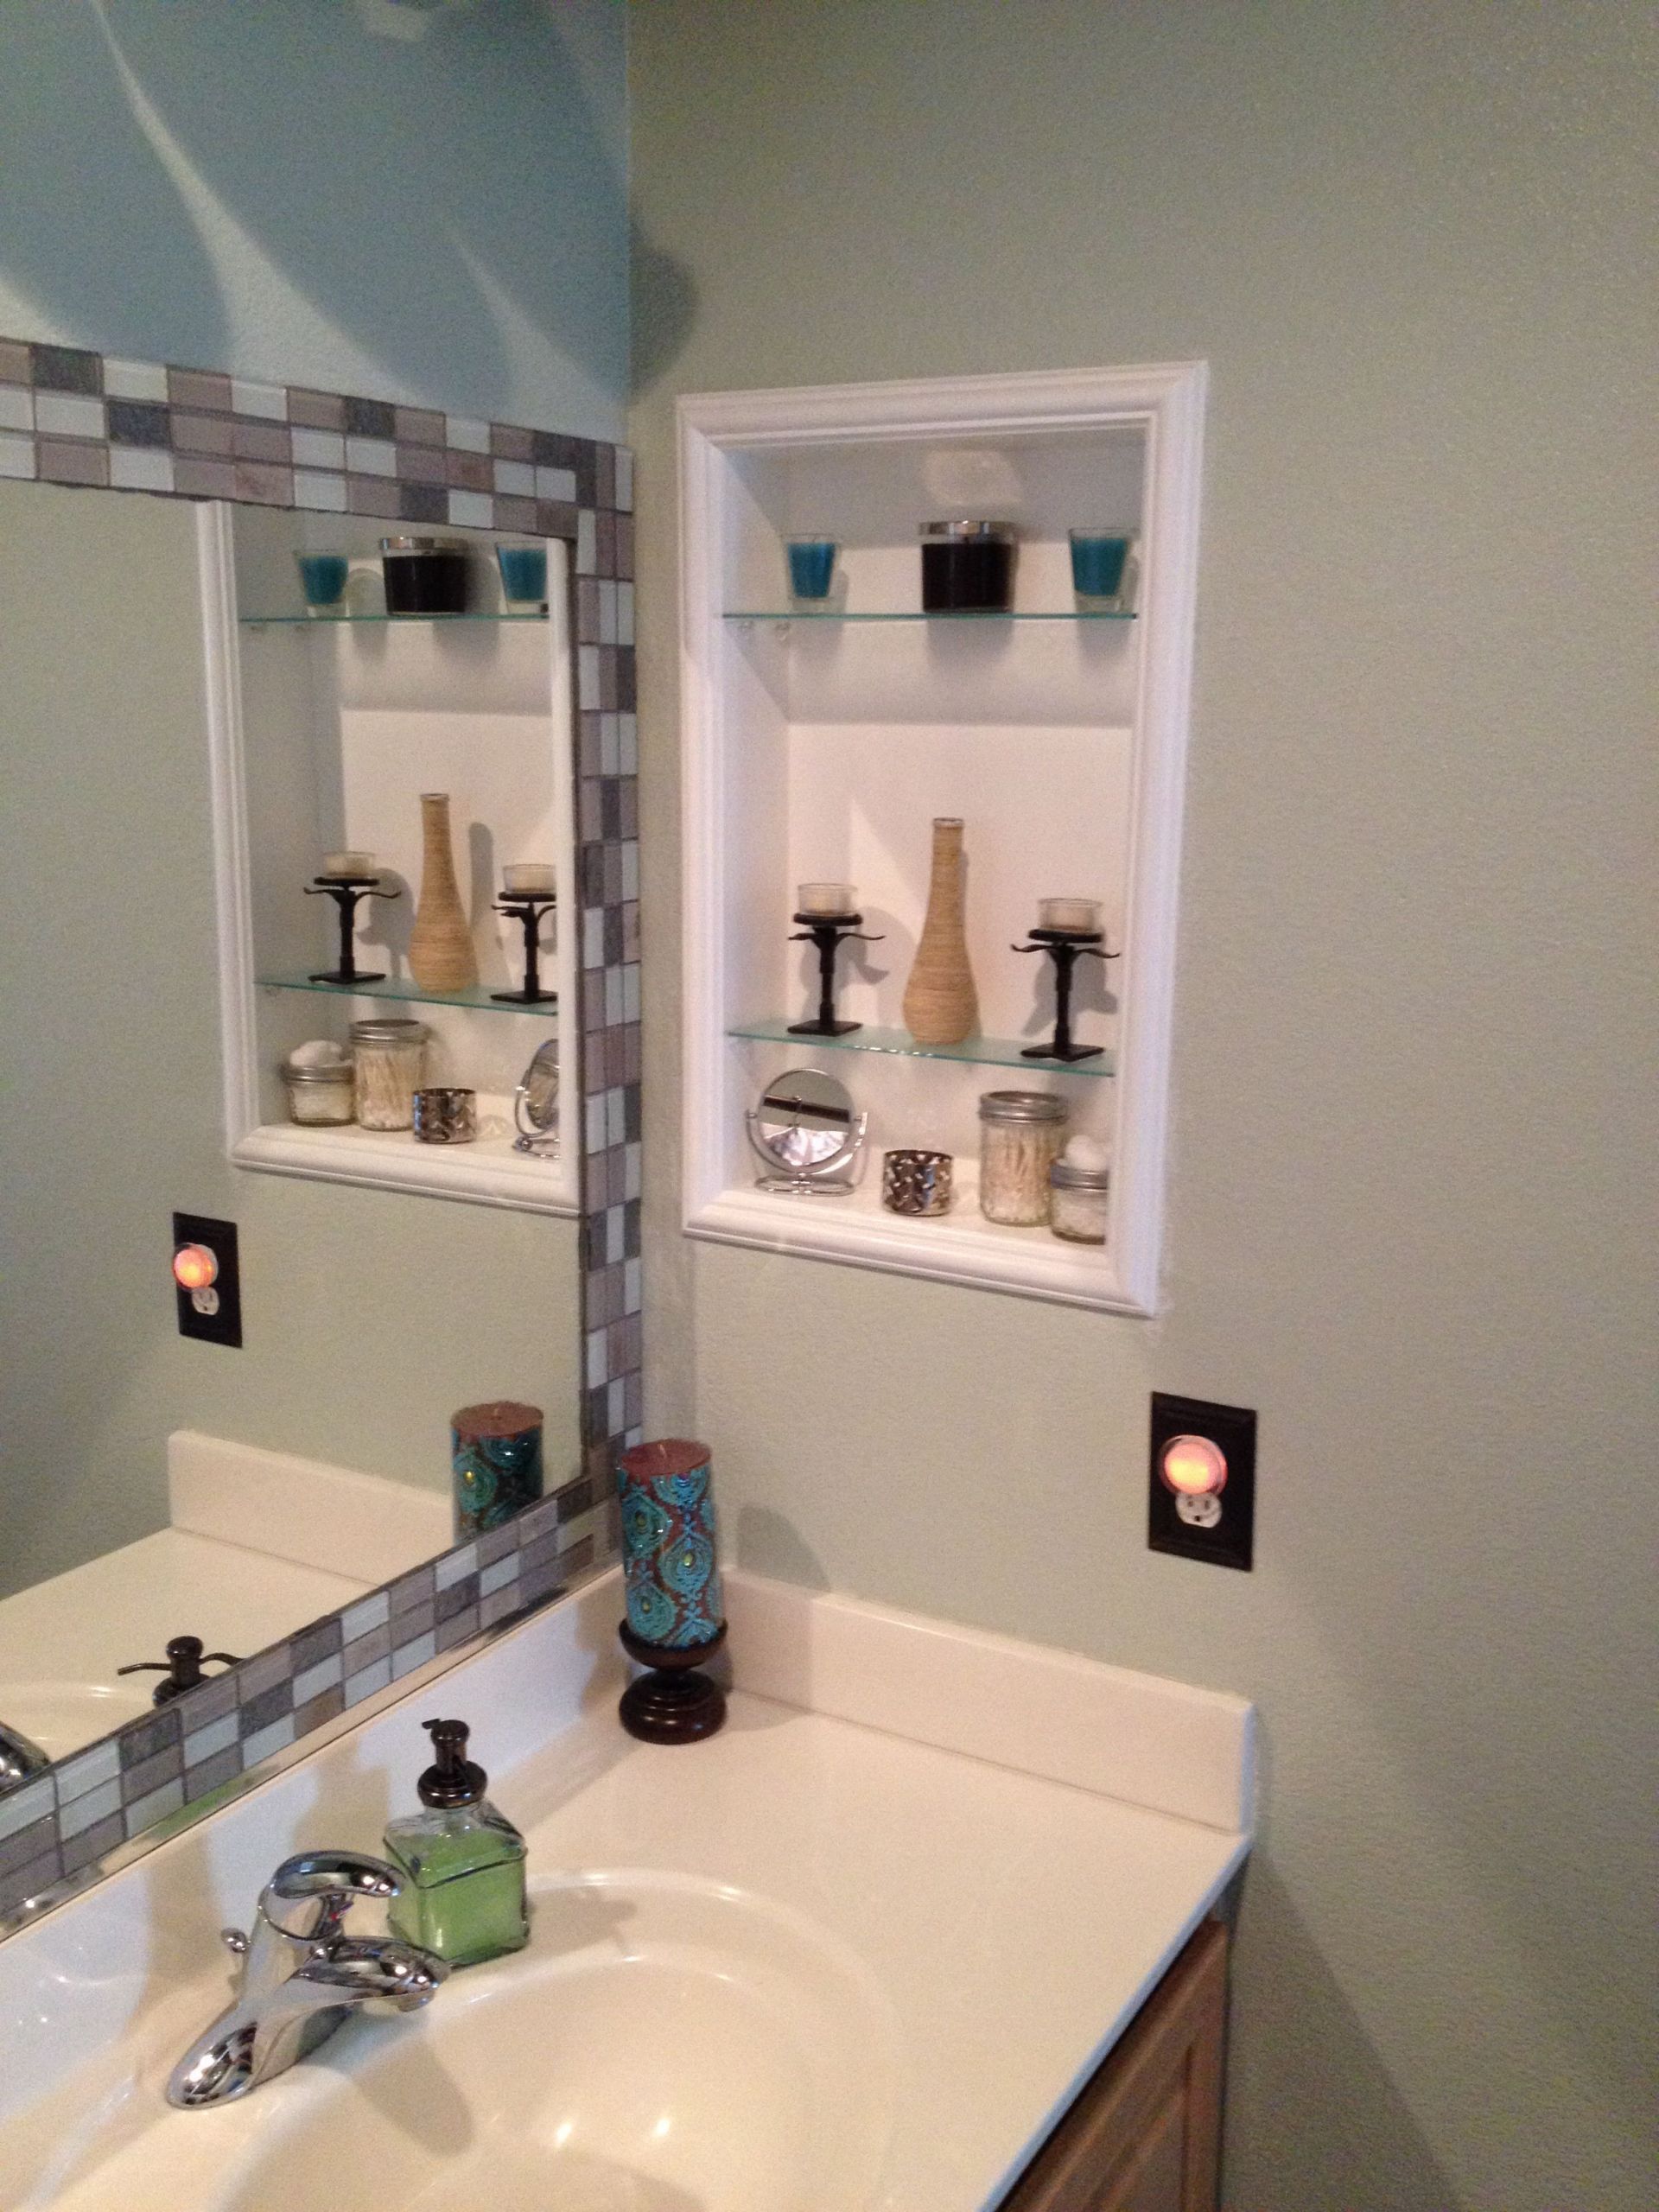 Small Bathroom Medicine Cabinet
 Framed medicine cabinet & tile around standard mirror